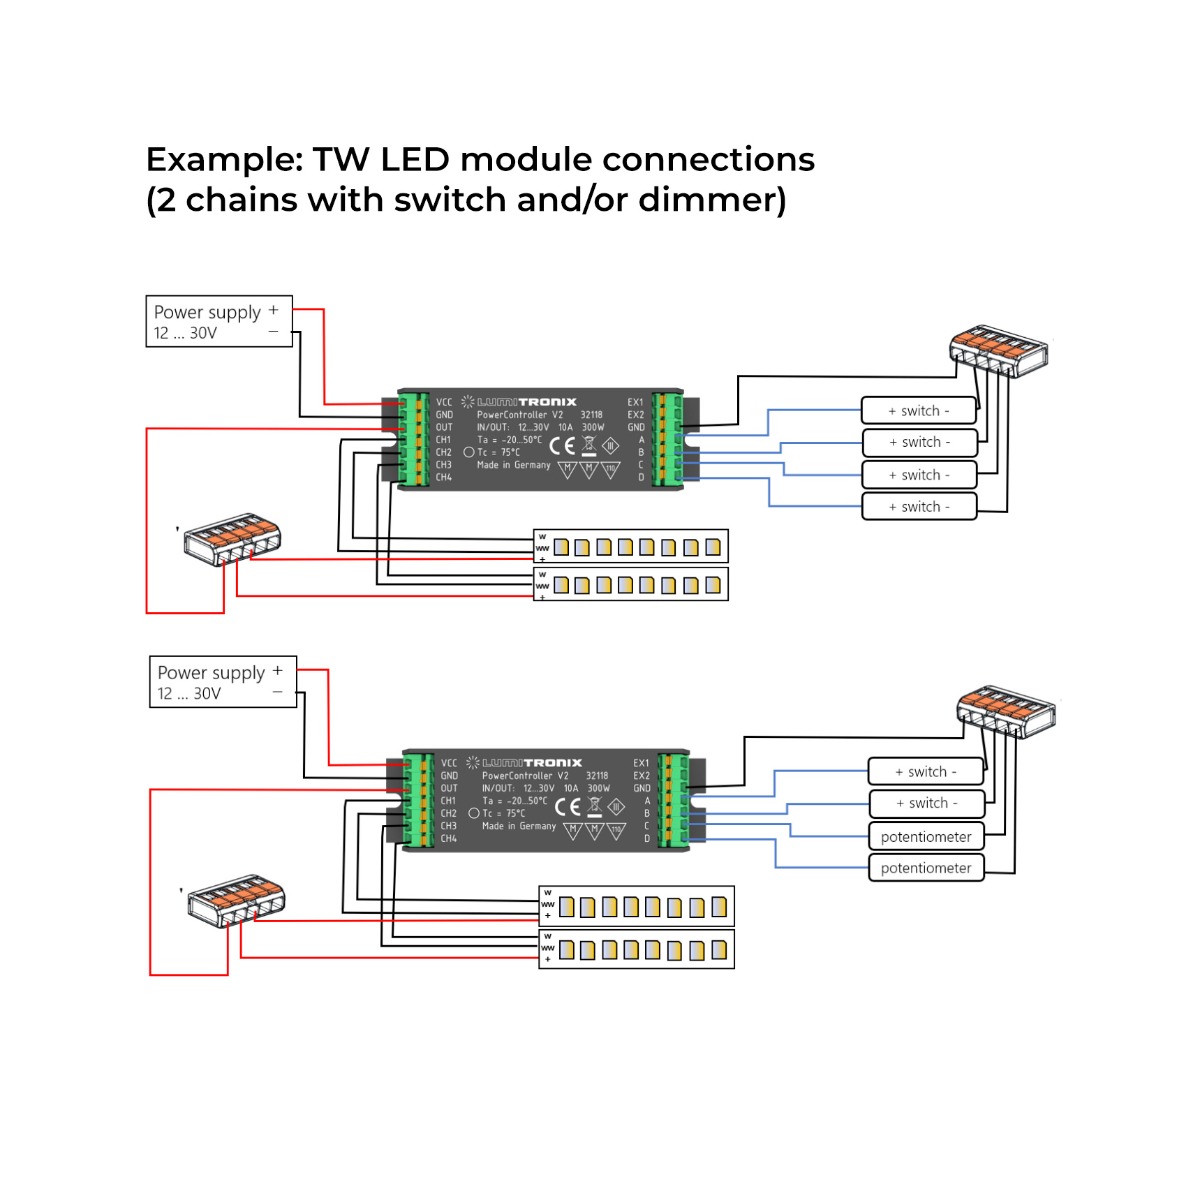 Sistem de control PowerController V2 1- 4 canale pentru Tunable White, RGBW sau culori la for 10-30VDC max 300W